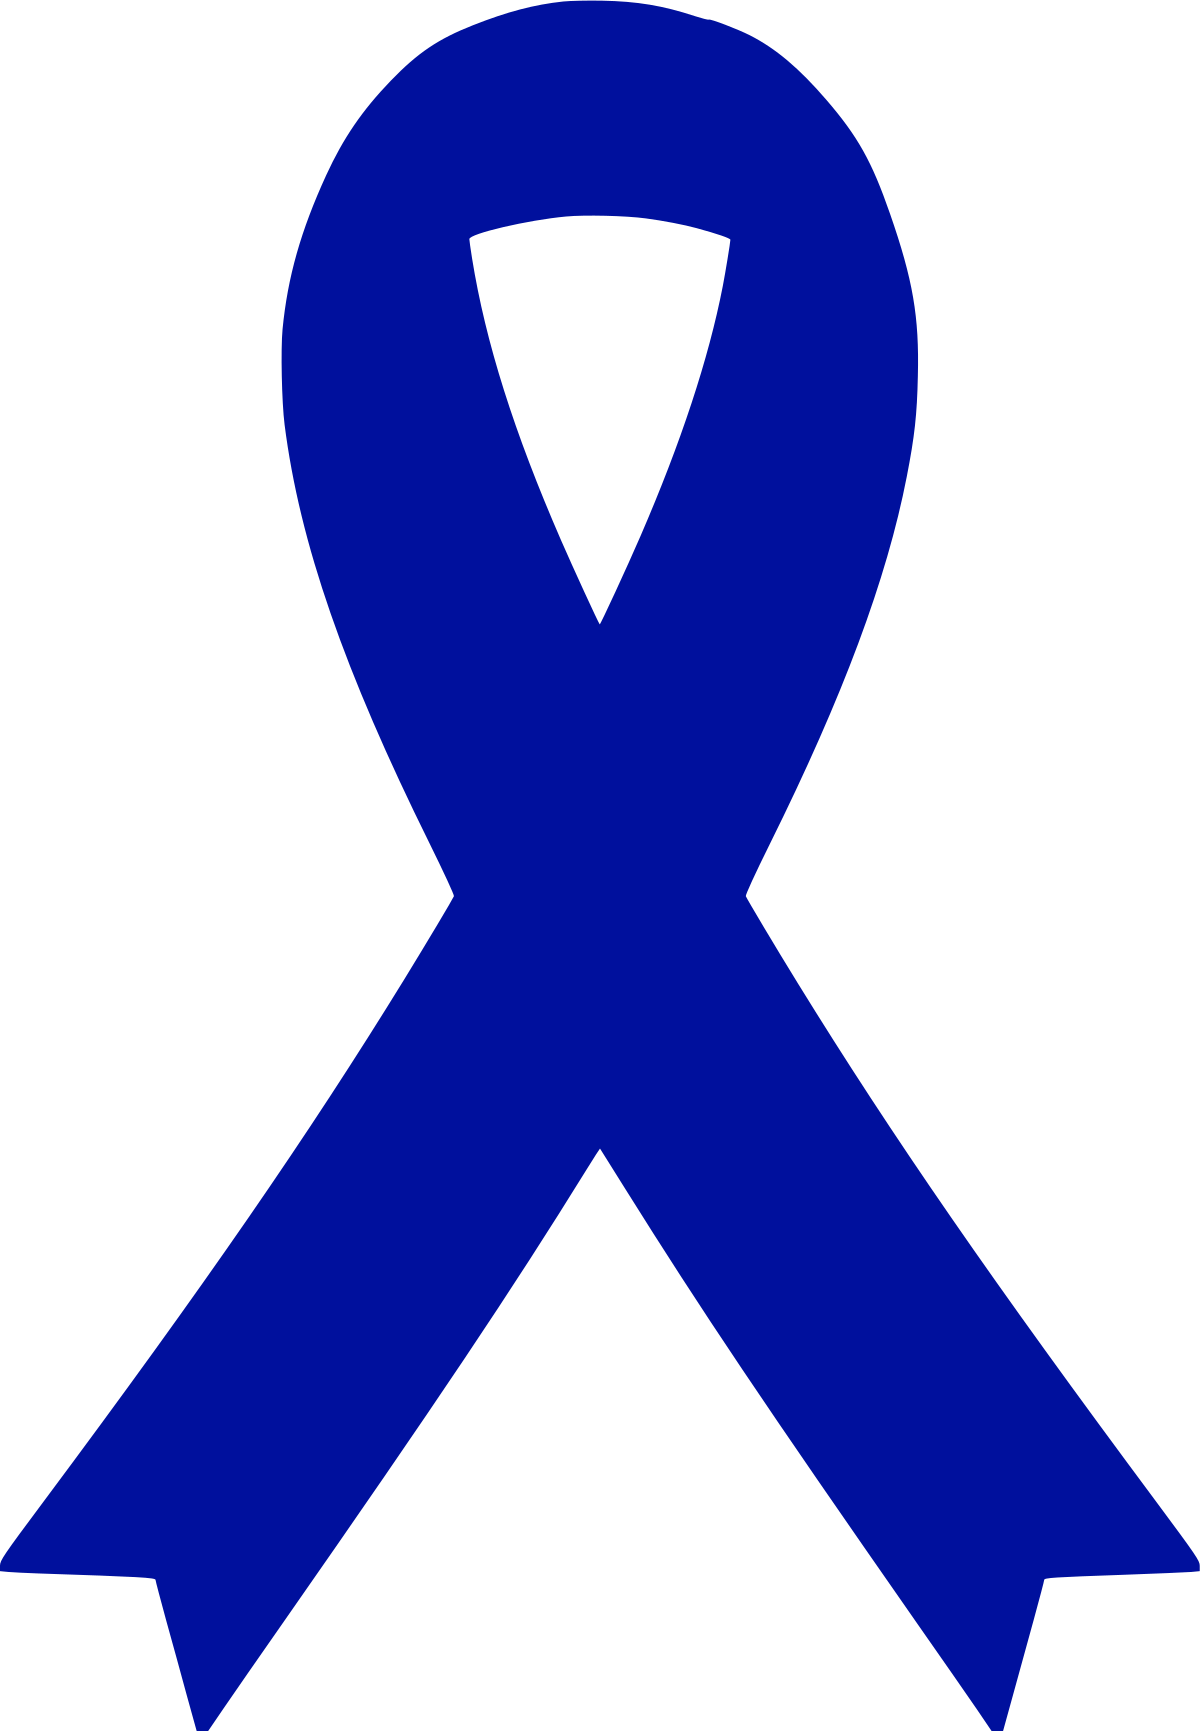 File:Blue awareness ribbon icon 2.svg - Wikimedia Commons